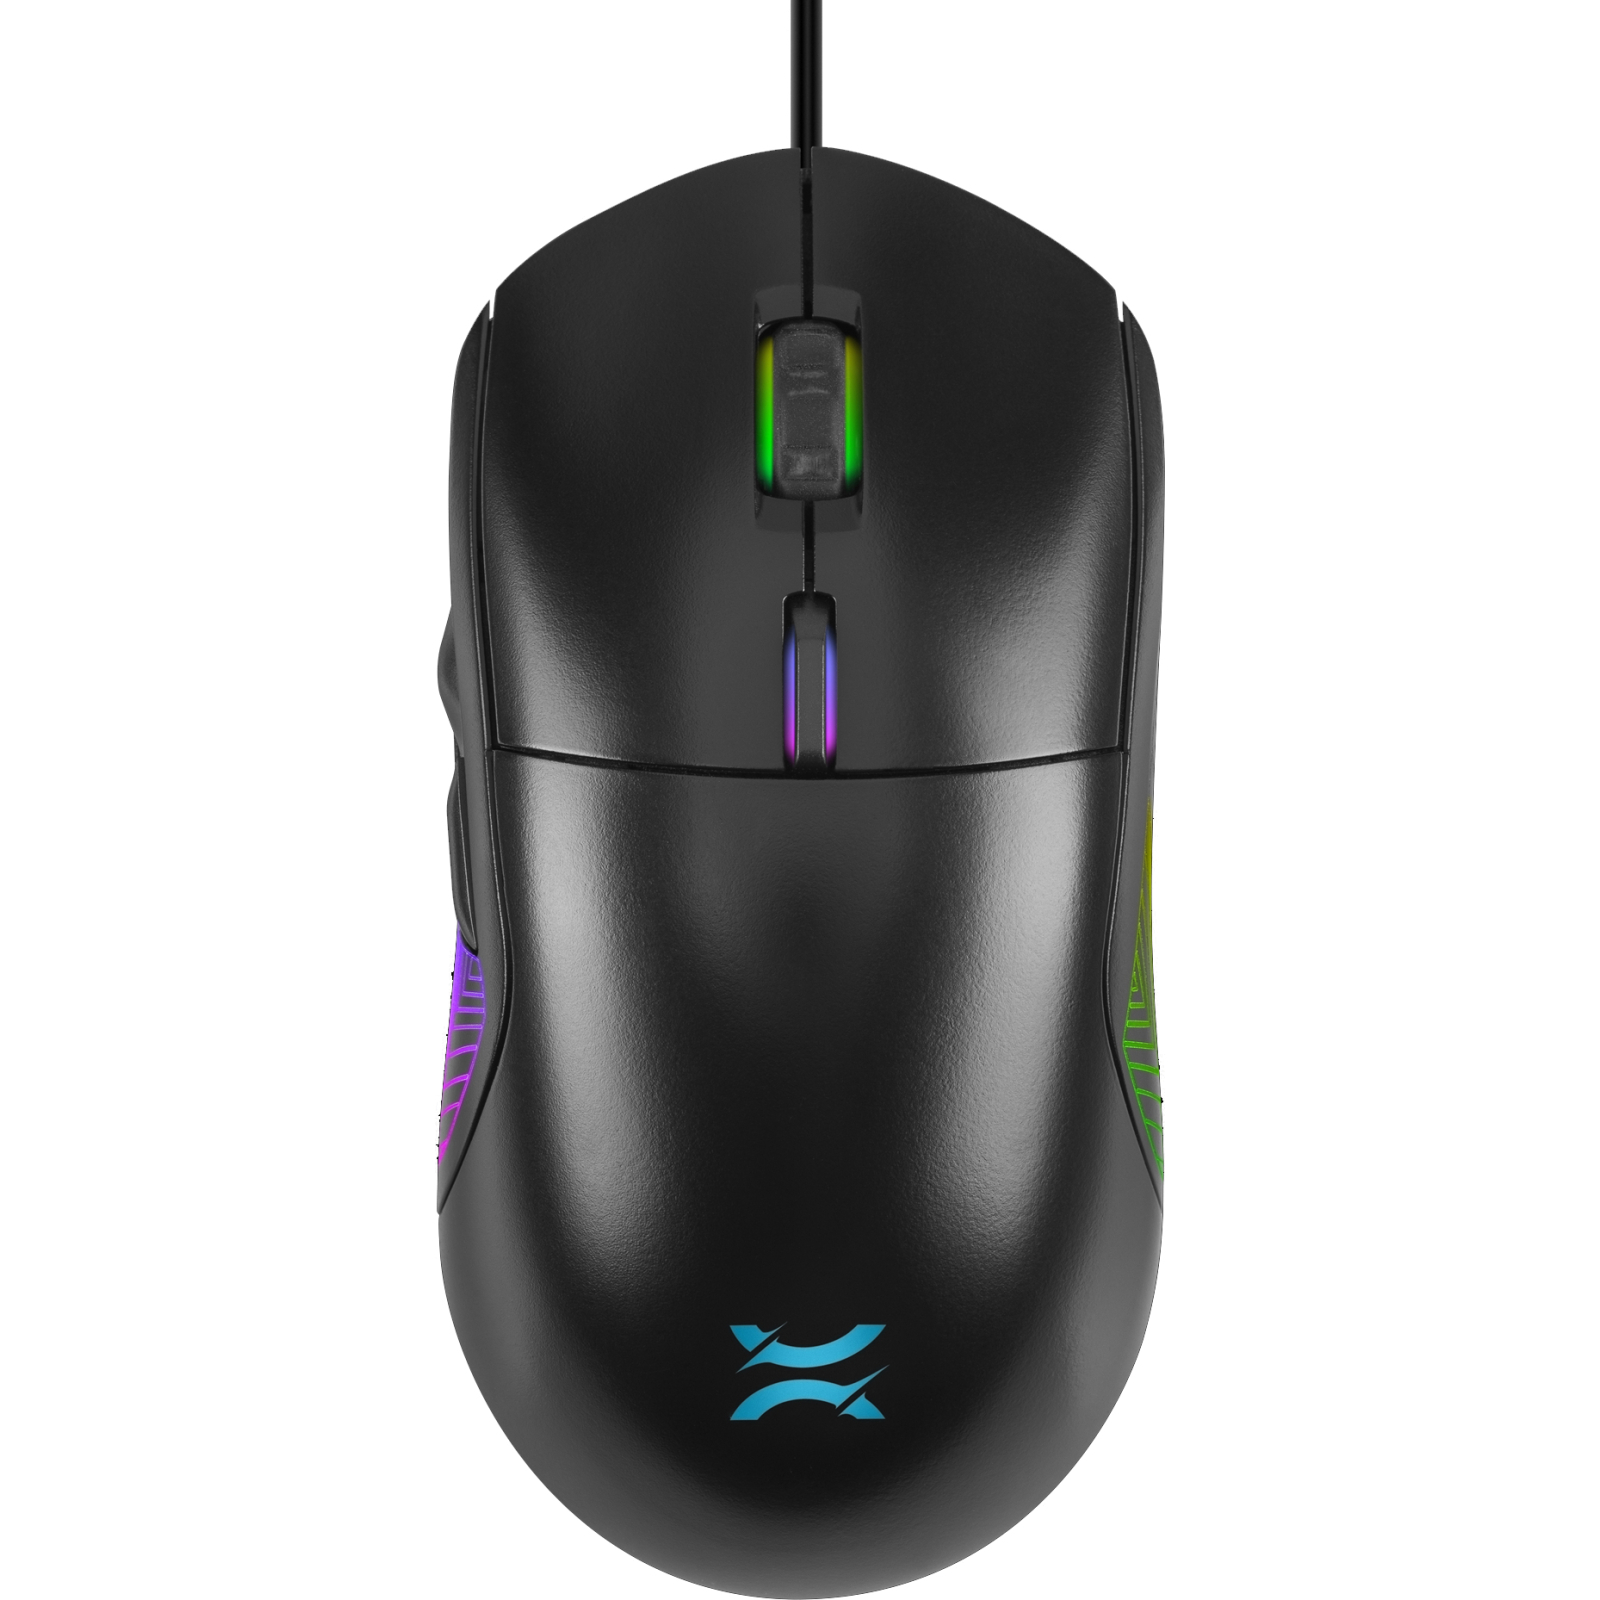 Мышка Noxo Scourge Gaming mouse USB Black (4770070881965) изображение 2